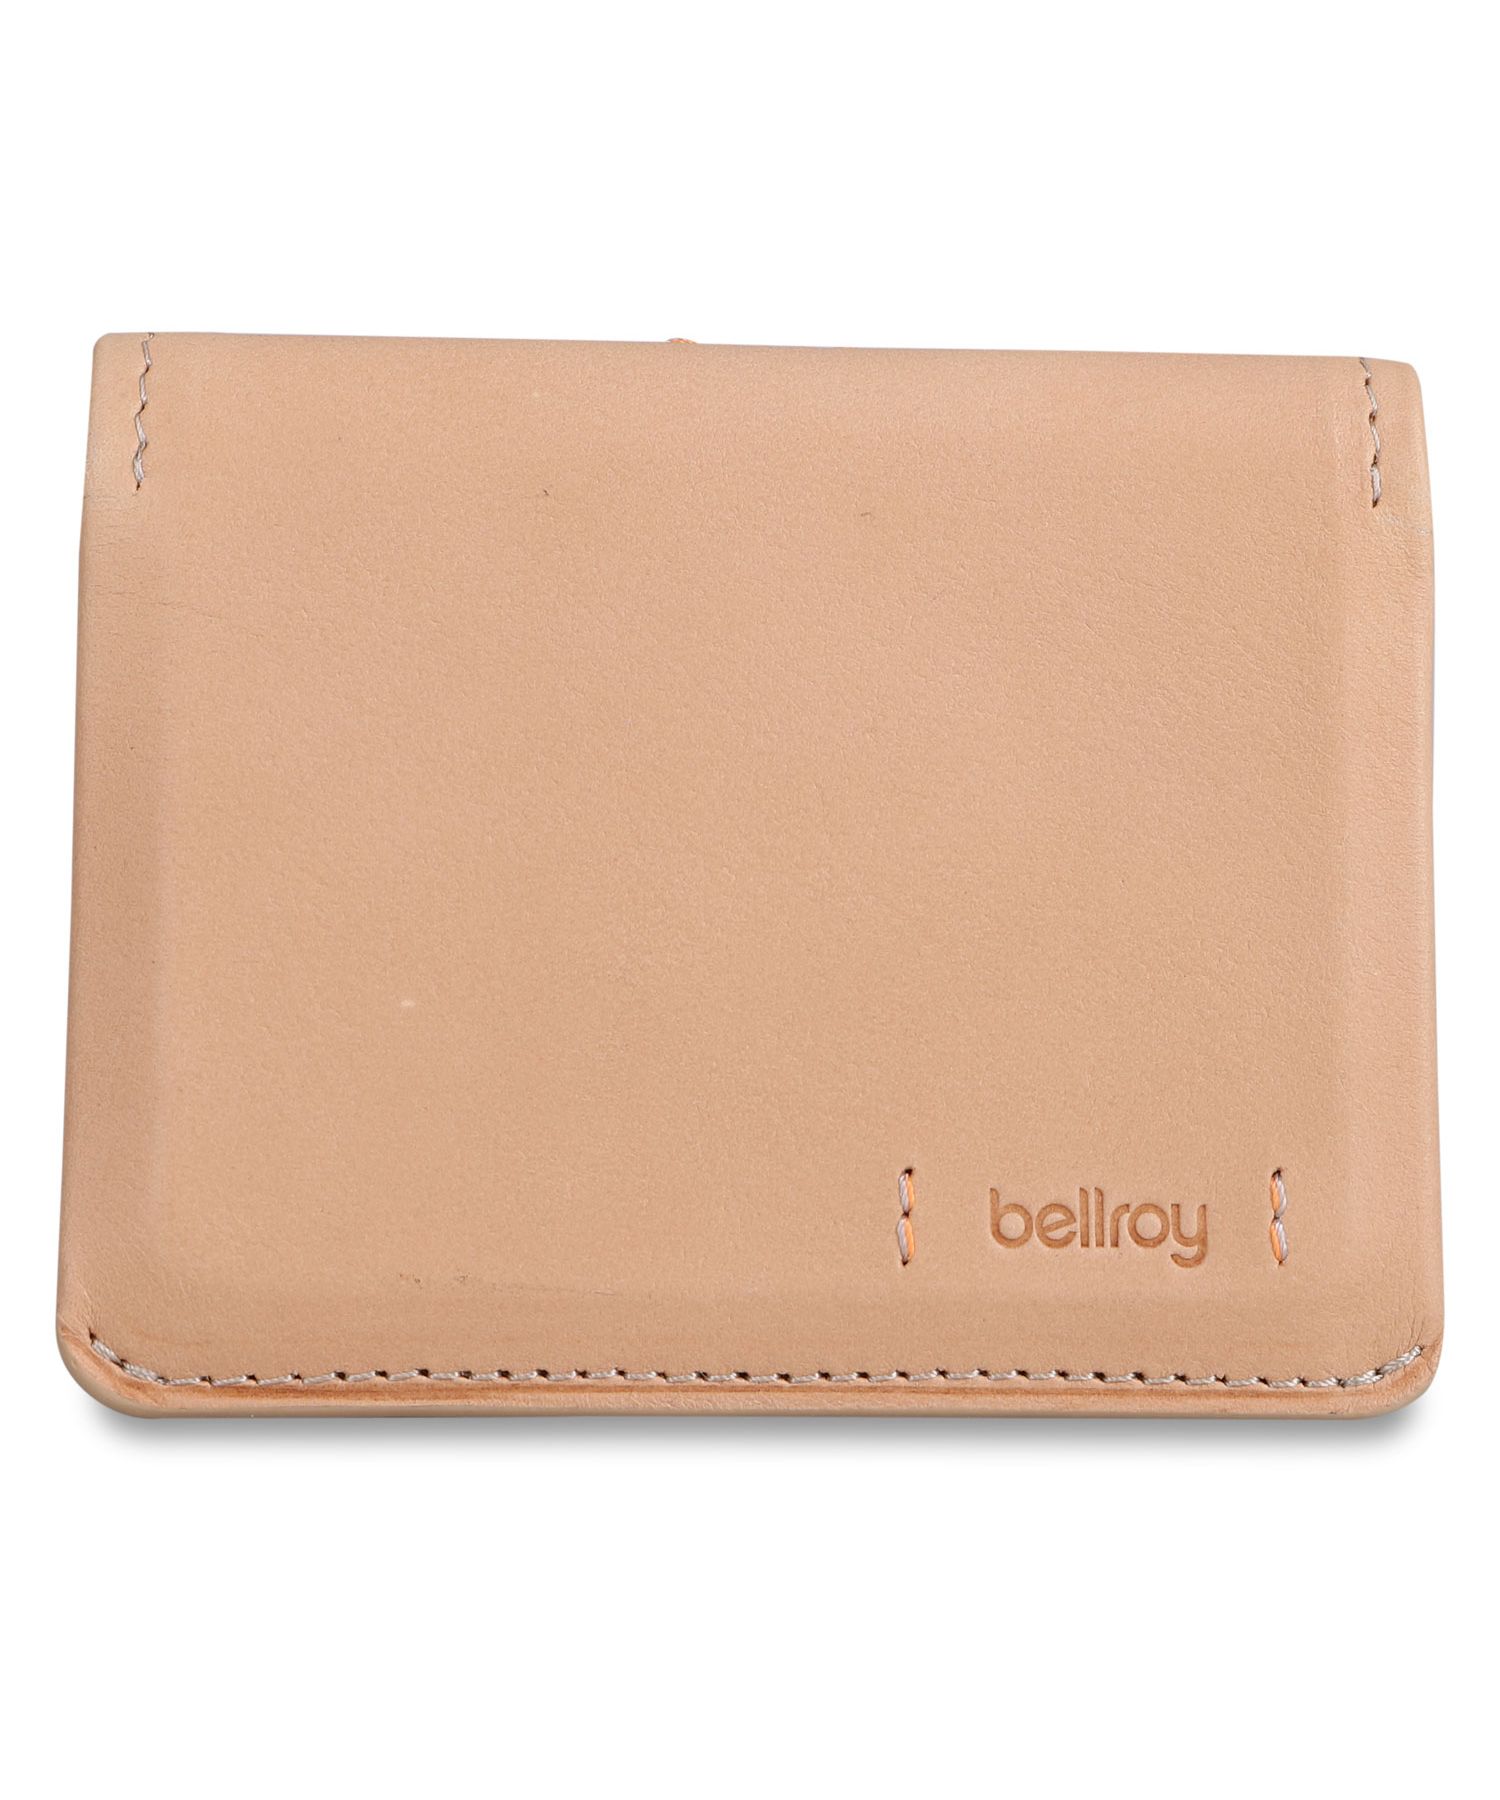 Bellroy ベルロイ 財布 カードケース ブラウン 新品 レアコインケース